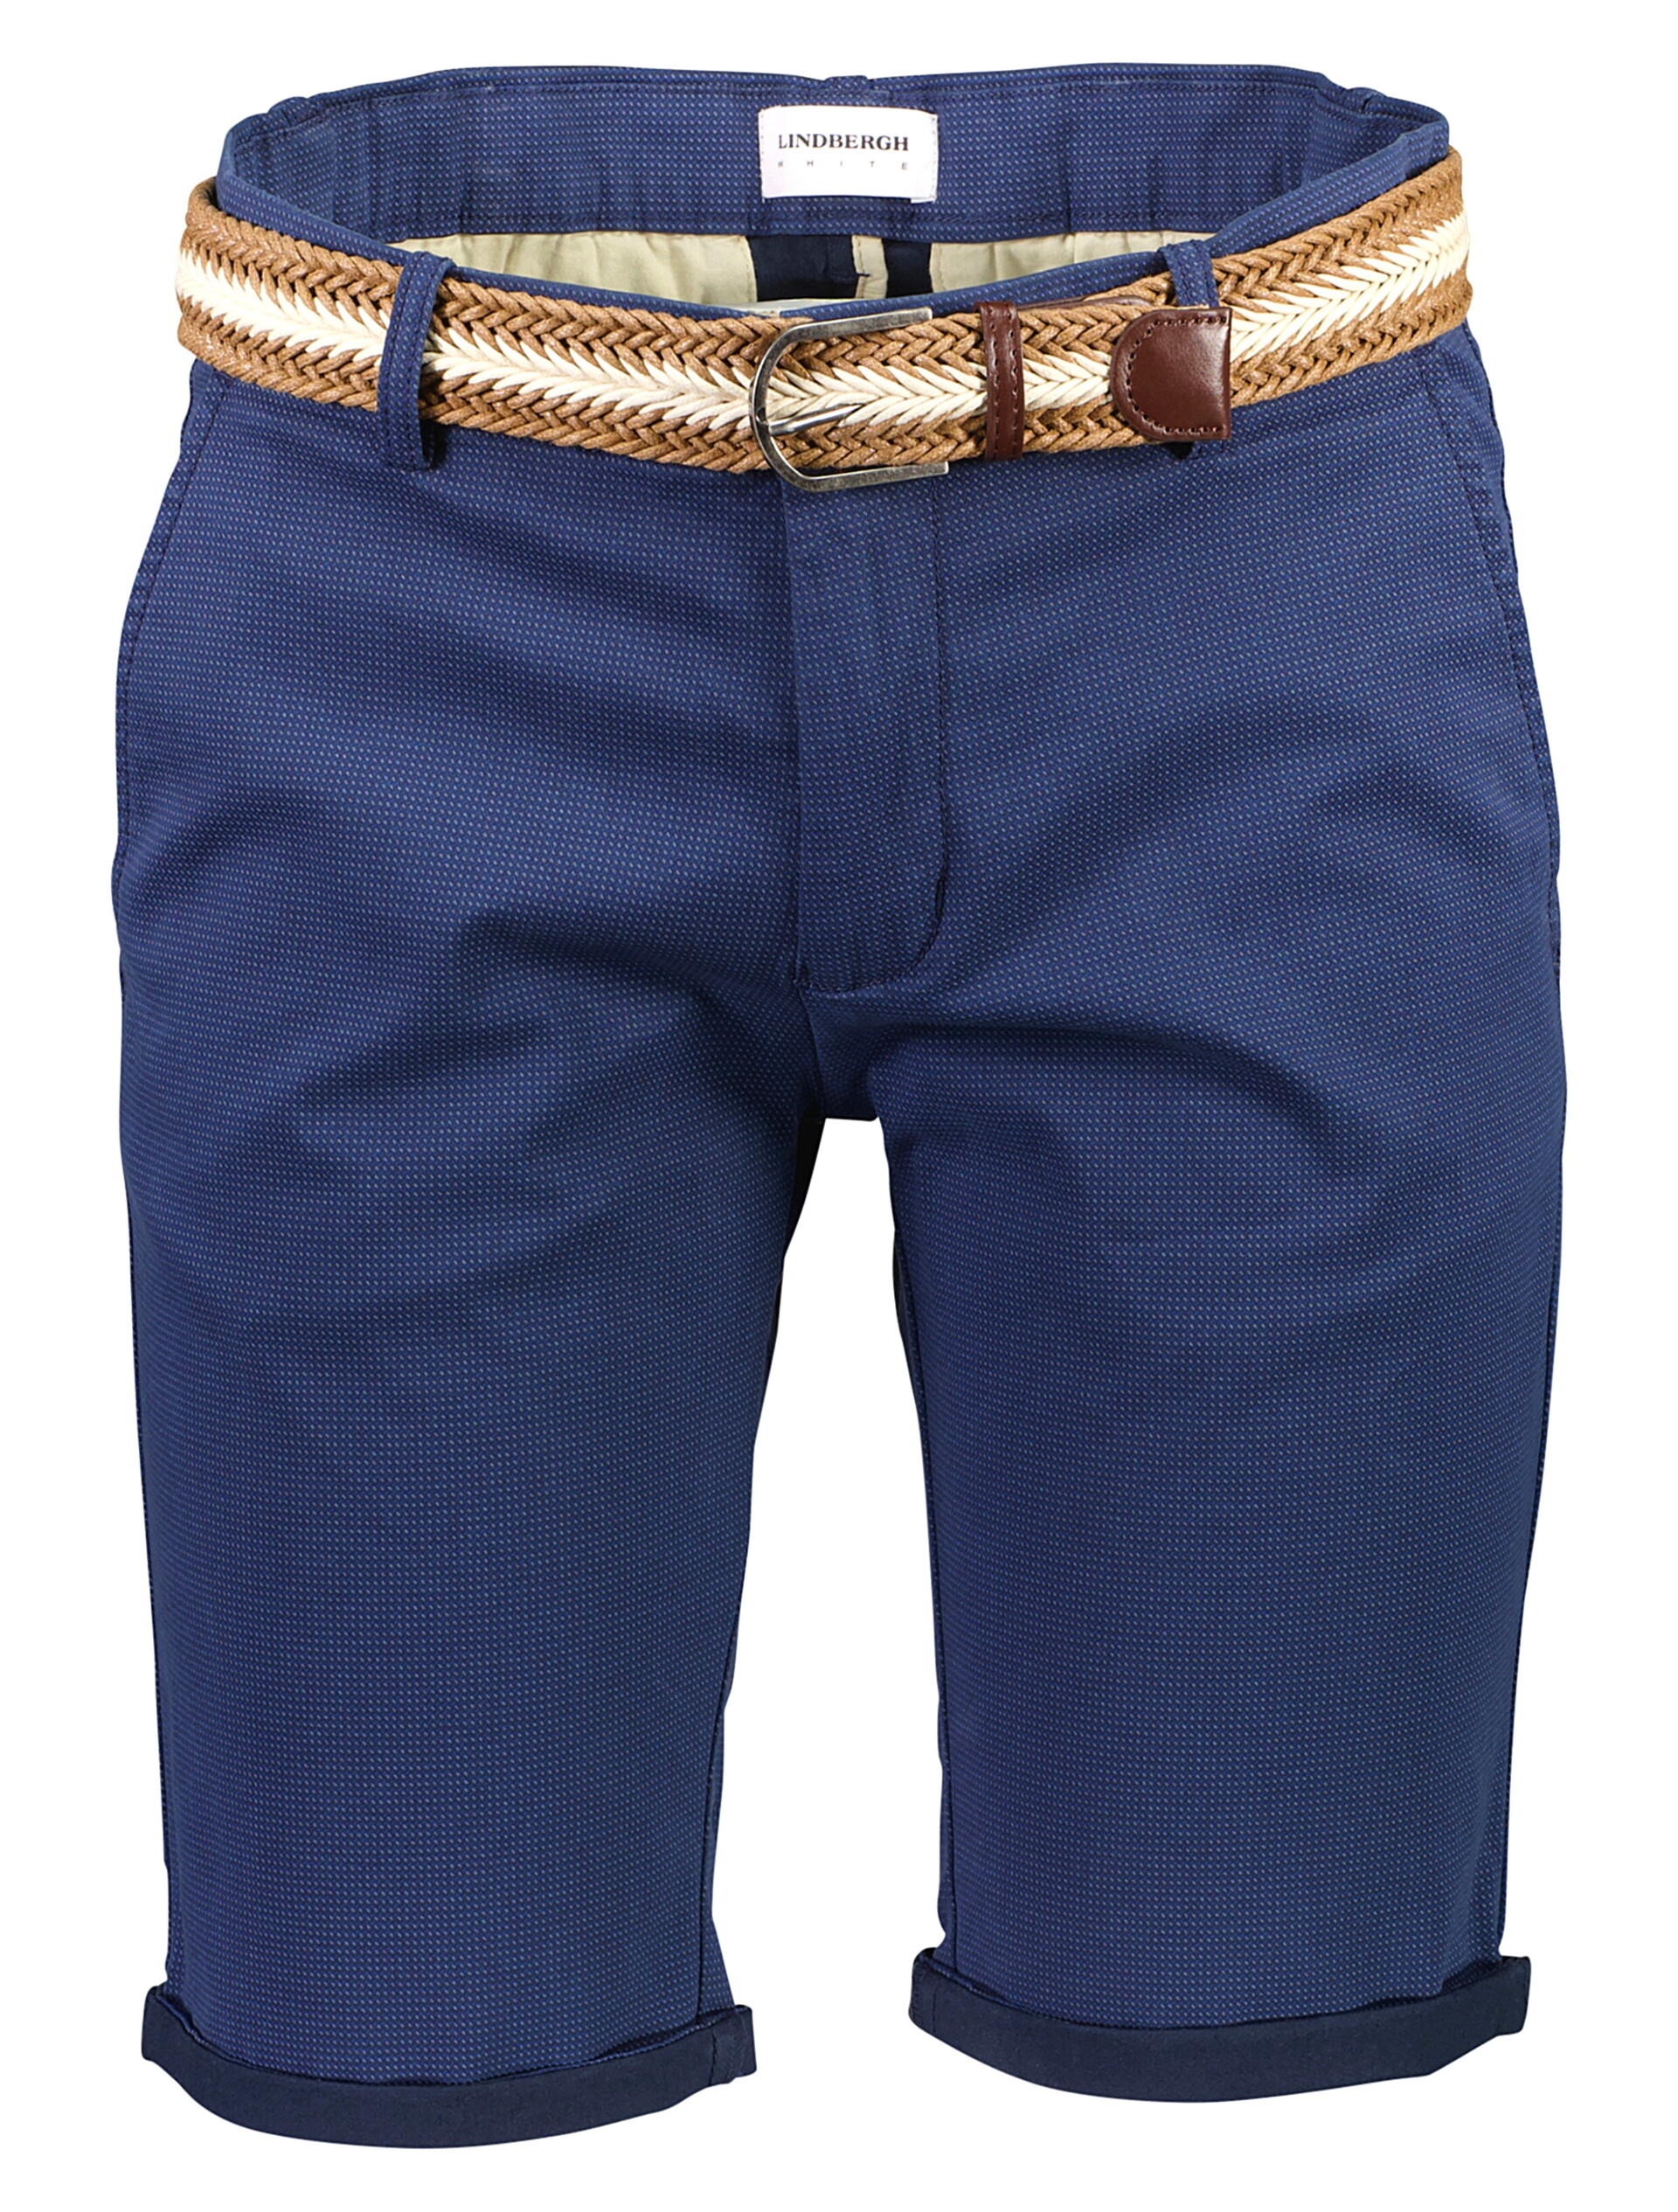 Lindbergh Chino shorts blue / navy